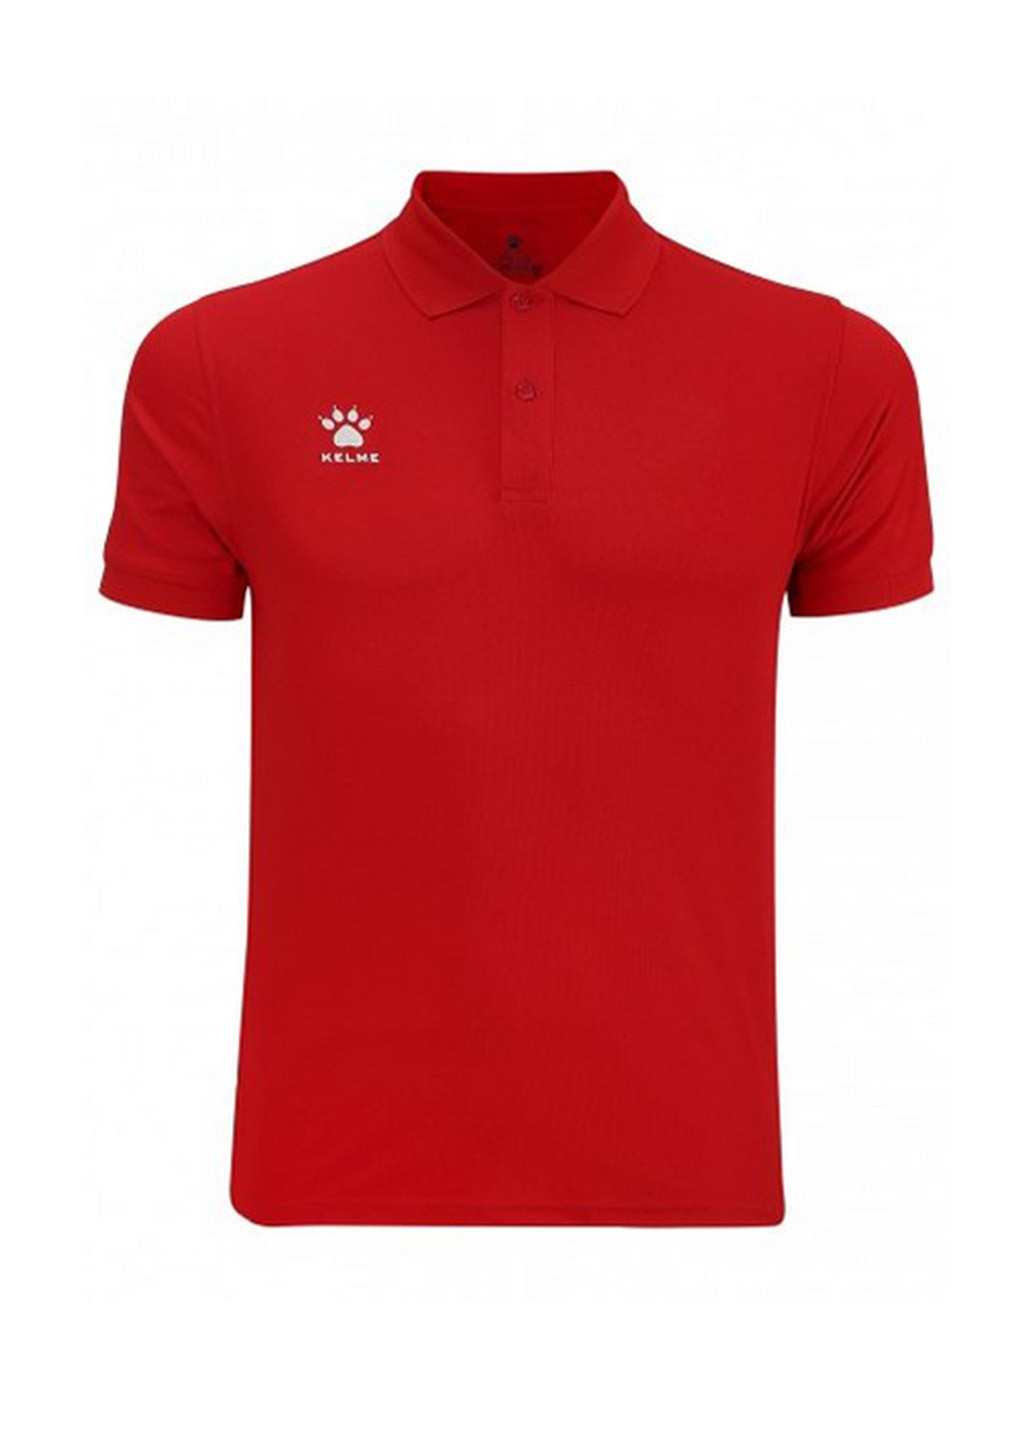 Красная футболка-поло для мужчин Kelme с логотипом